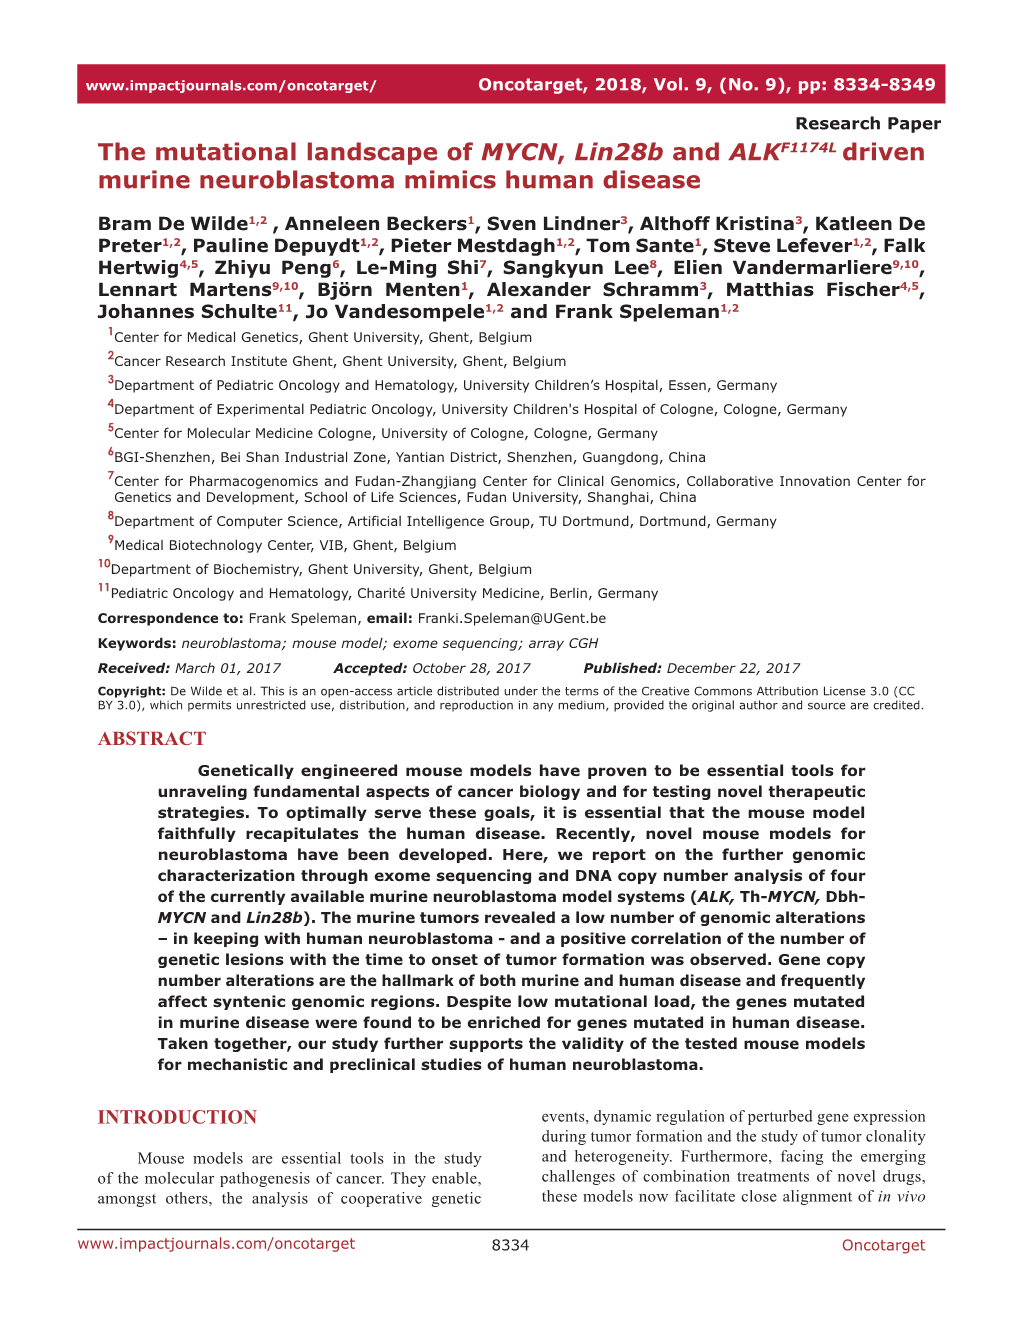 The Mutational Landscape of MYCN, Lin28b and ALKF1174L Driven Murine Neuroblastoma Mimics Human Disease